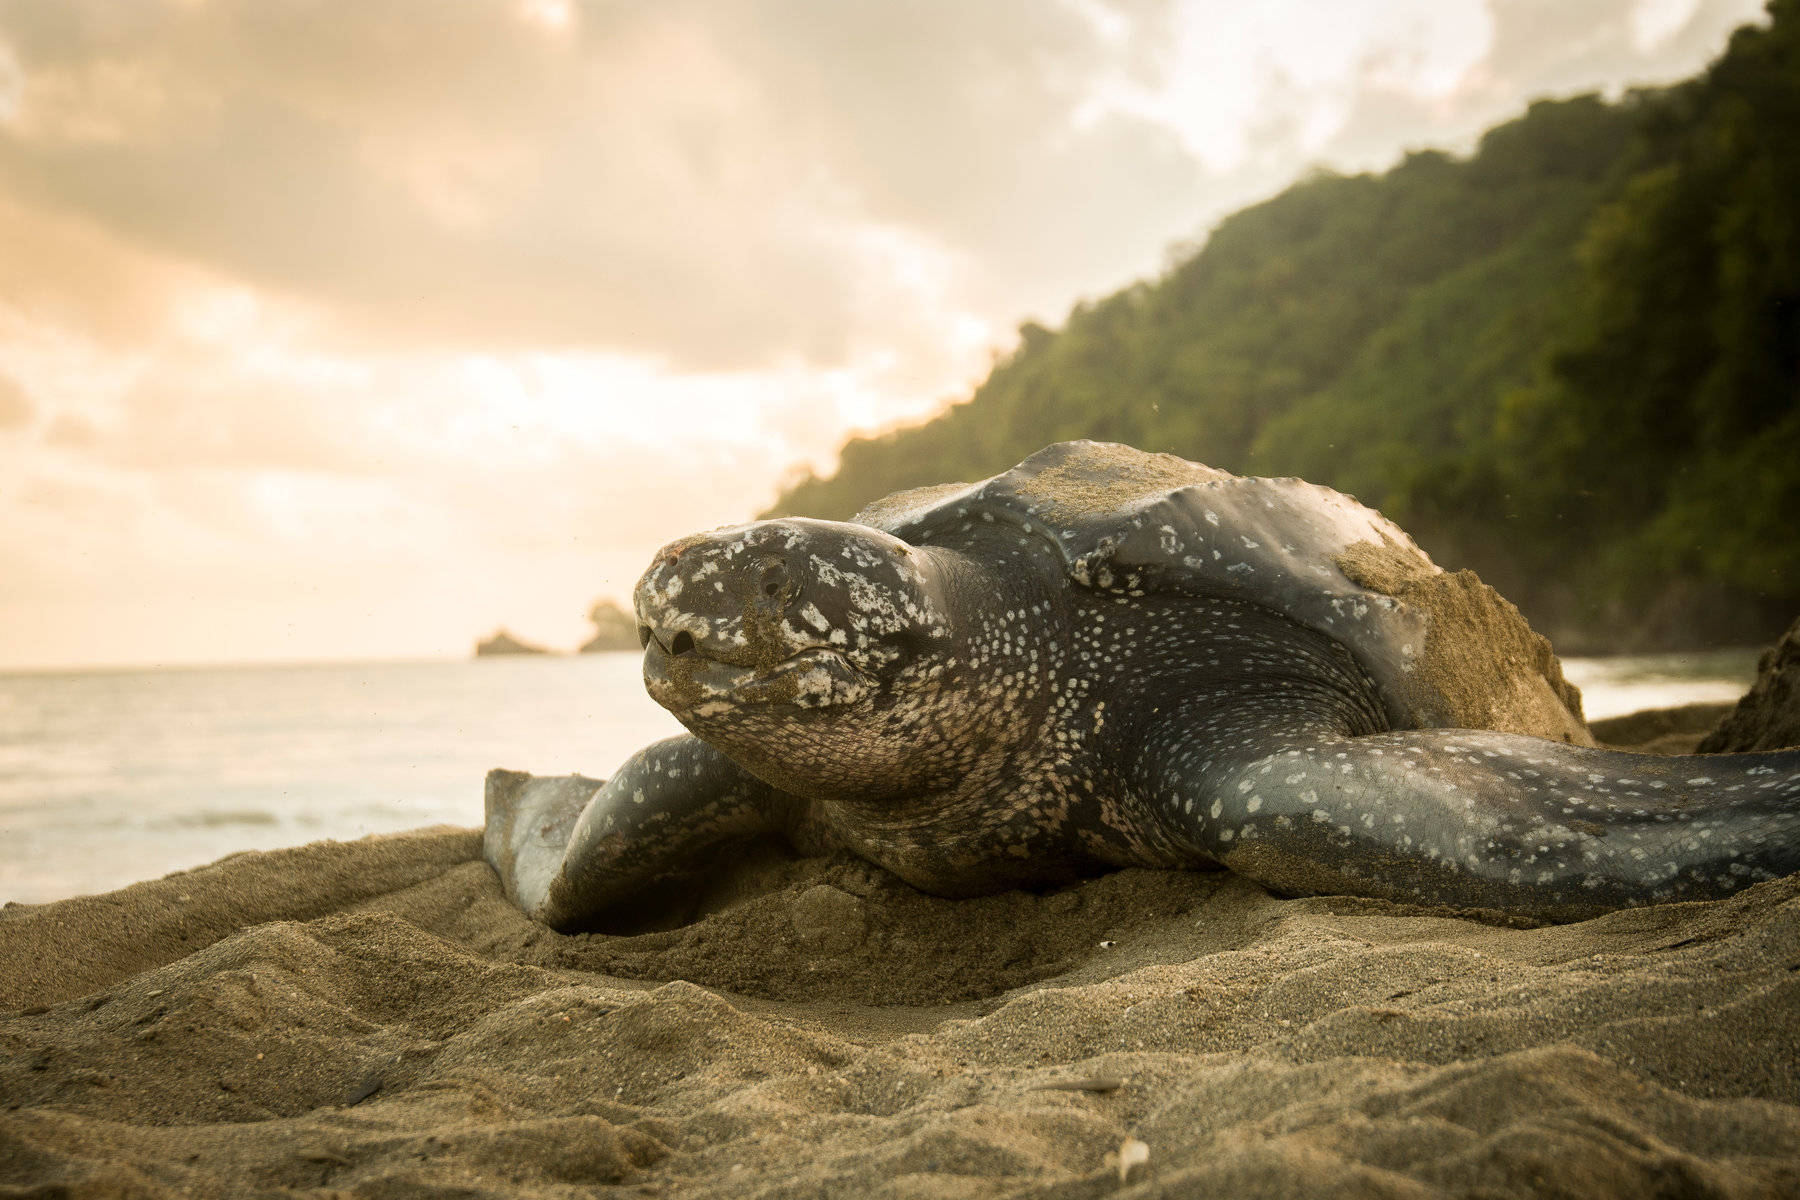 Caption: Pristine Wildlife in French Guiana - A Sea Turtle on Shore Wallpaper